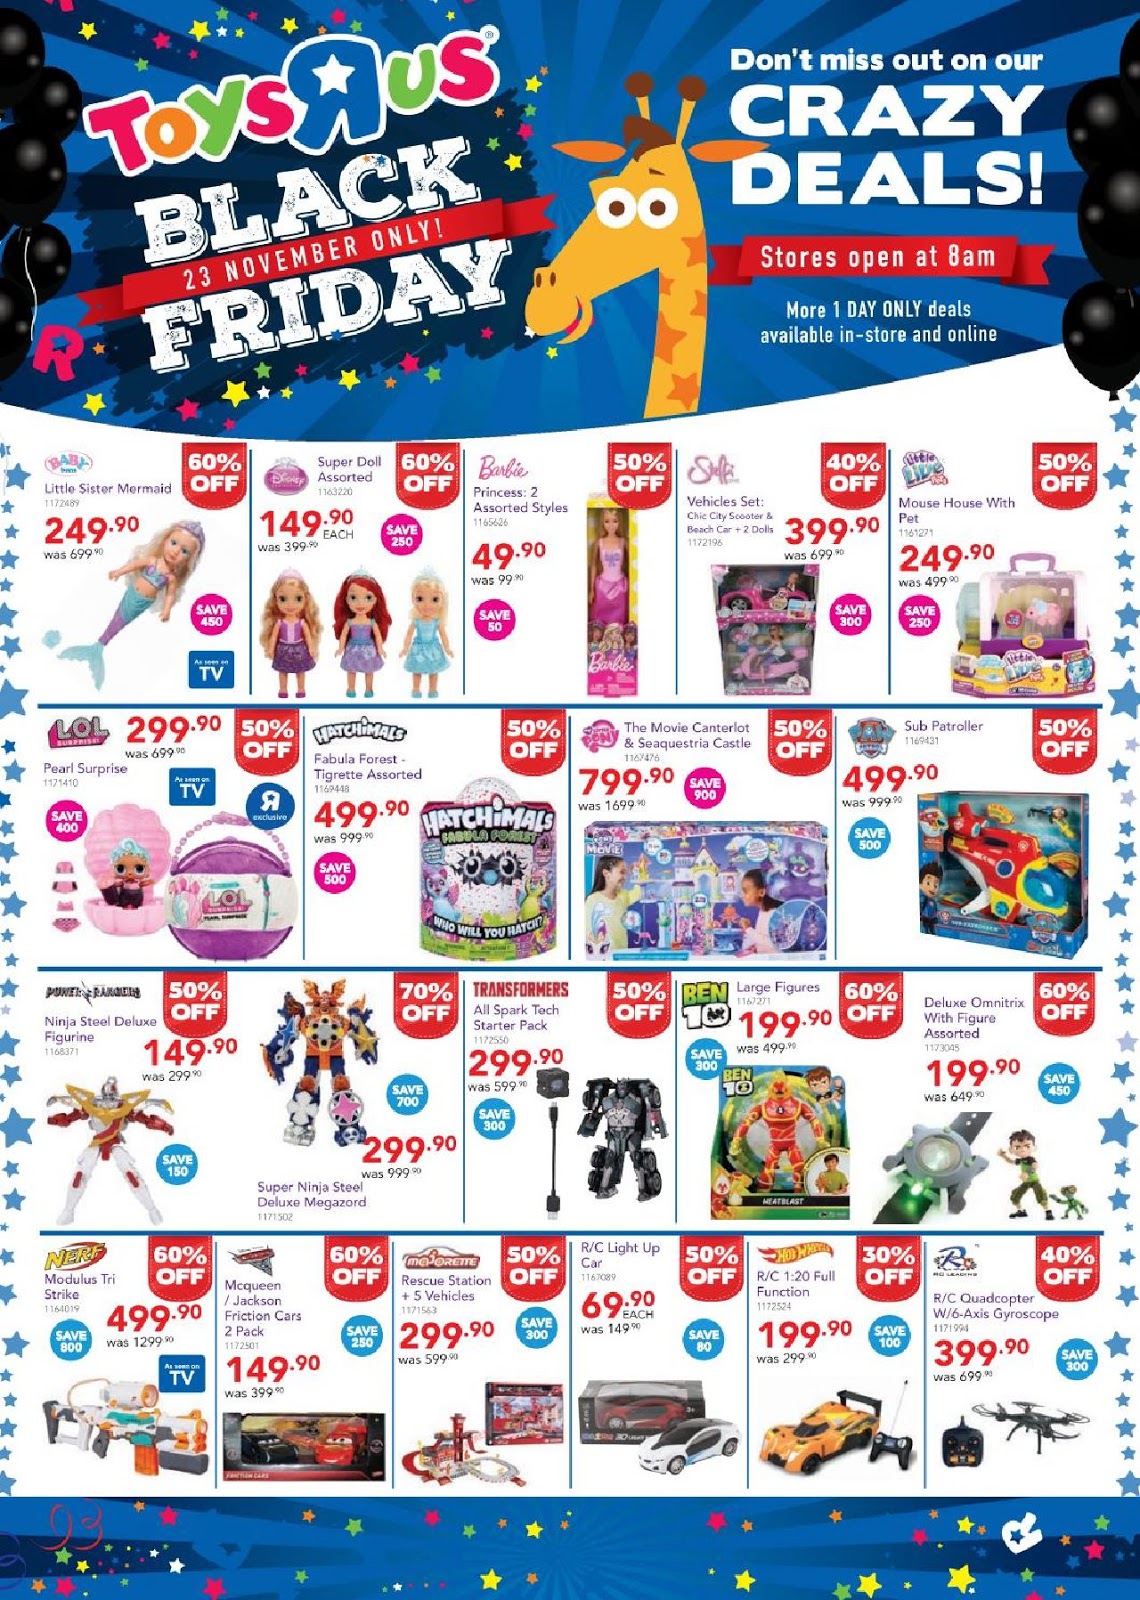 Toys R Us Black Friday Deals, Ads, Sale, special 2019 #BlackFriday - Will Toys R Us Black Friday Deals Be Available Online